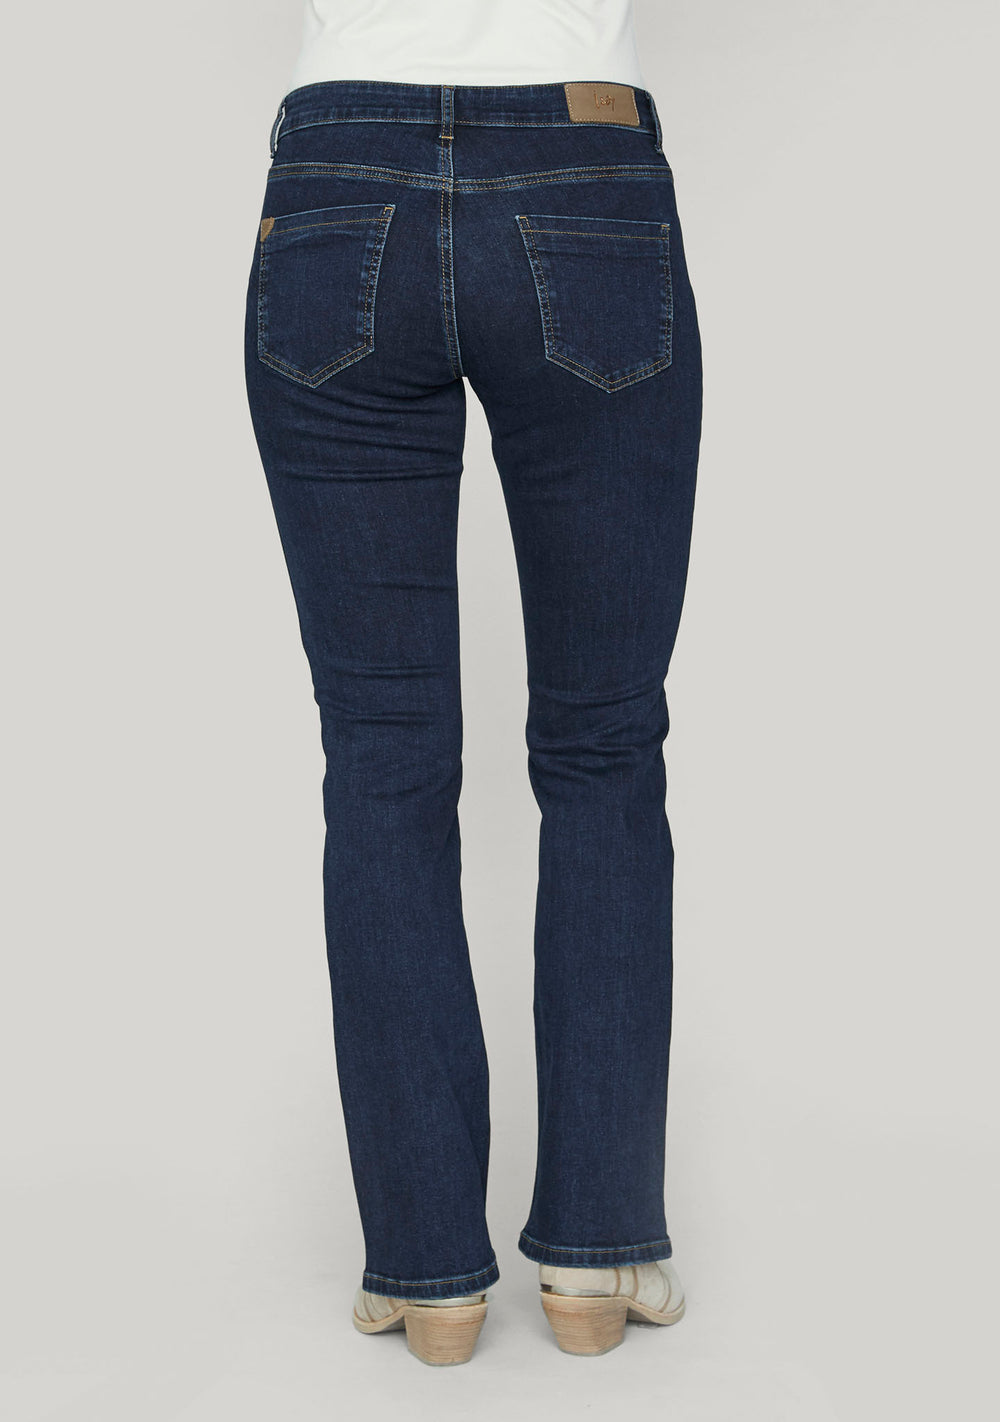 I SAY Parma Long Basic Jeans Pants 654 Blue Denim